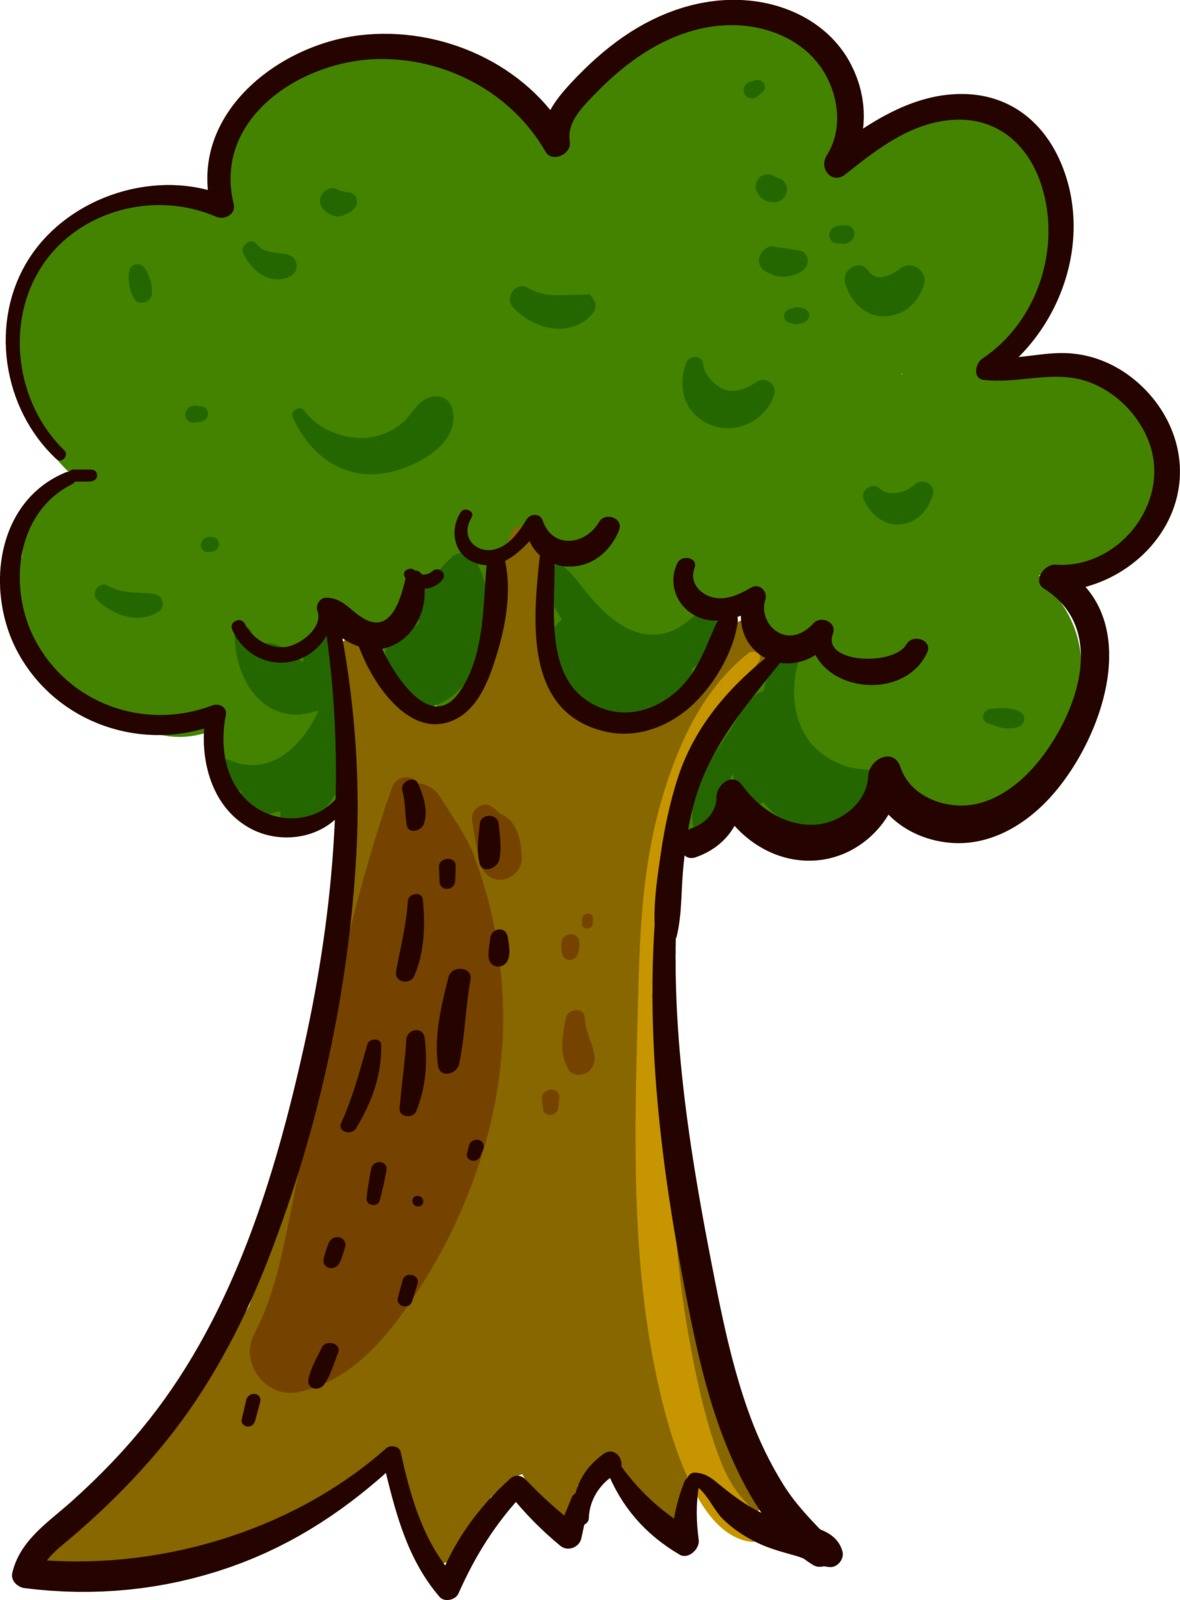 Oak tall tree, illustration, vector on white background by Morphart